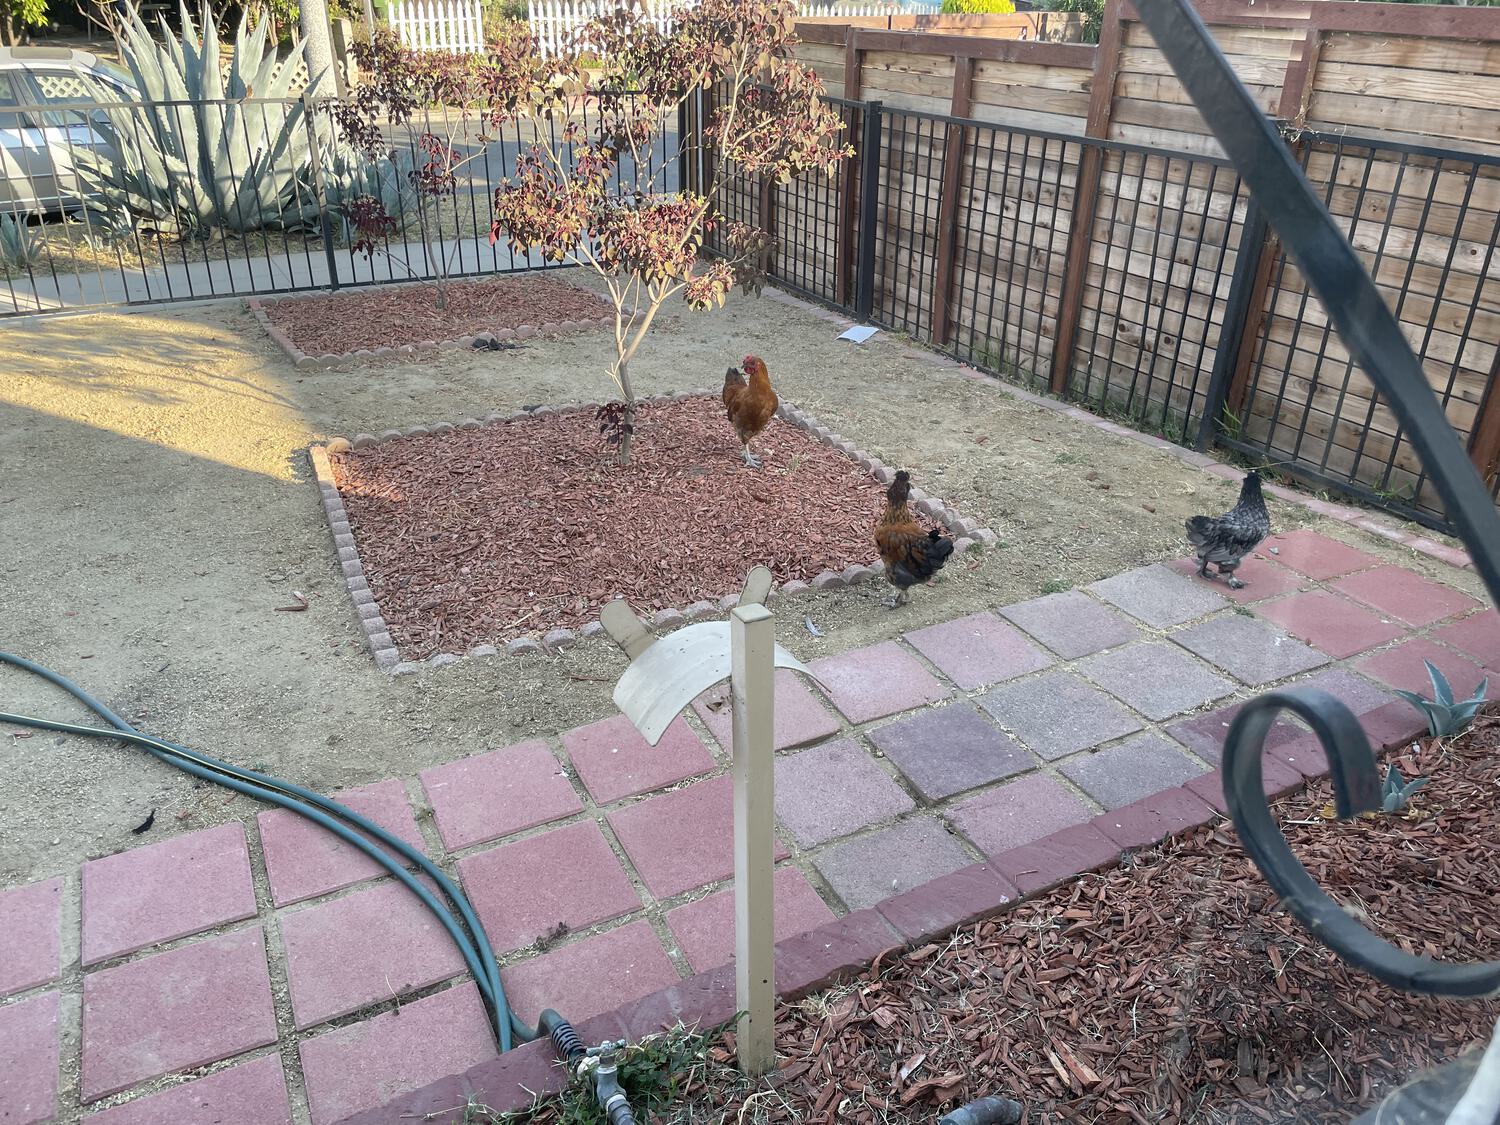 Chickens wandering around a yard